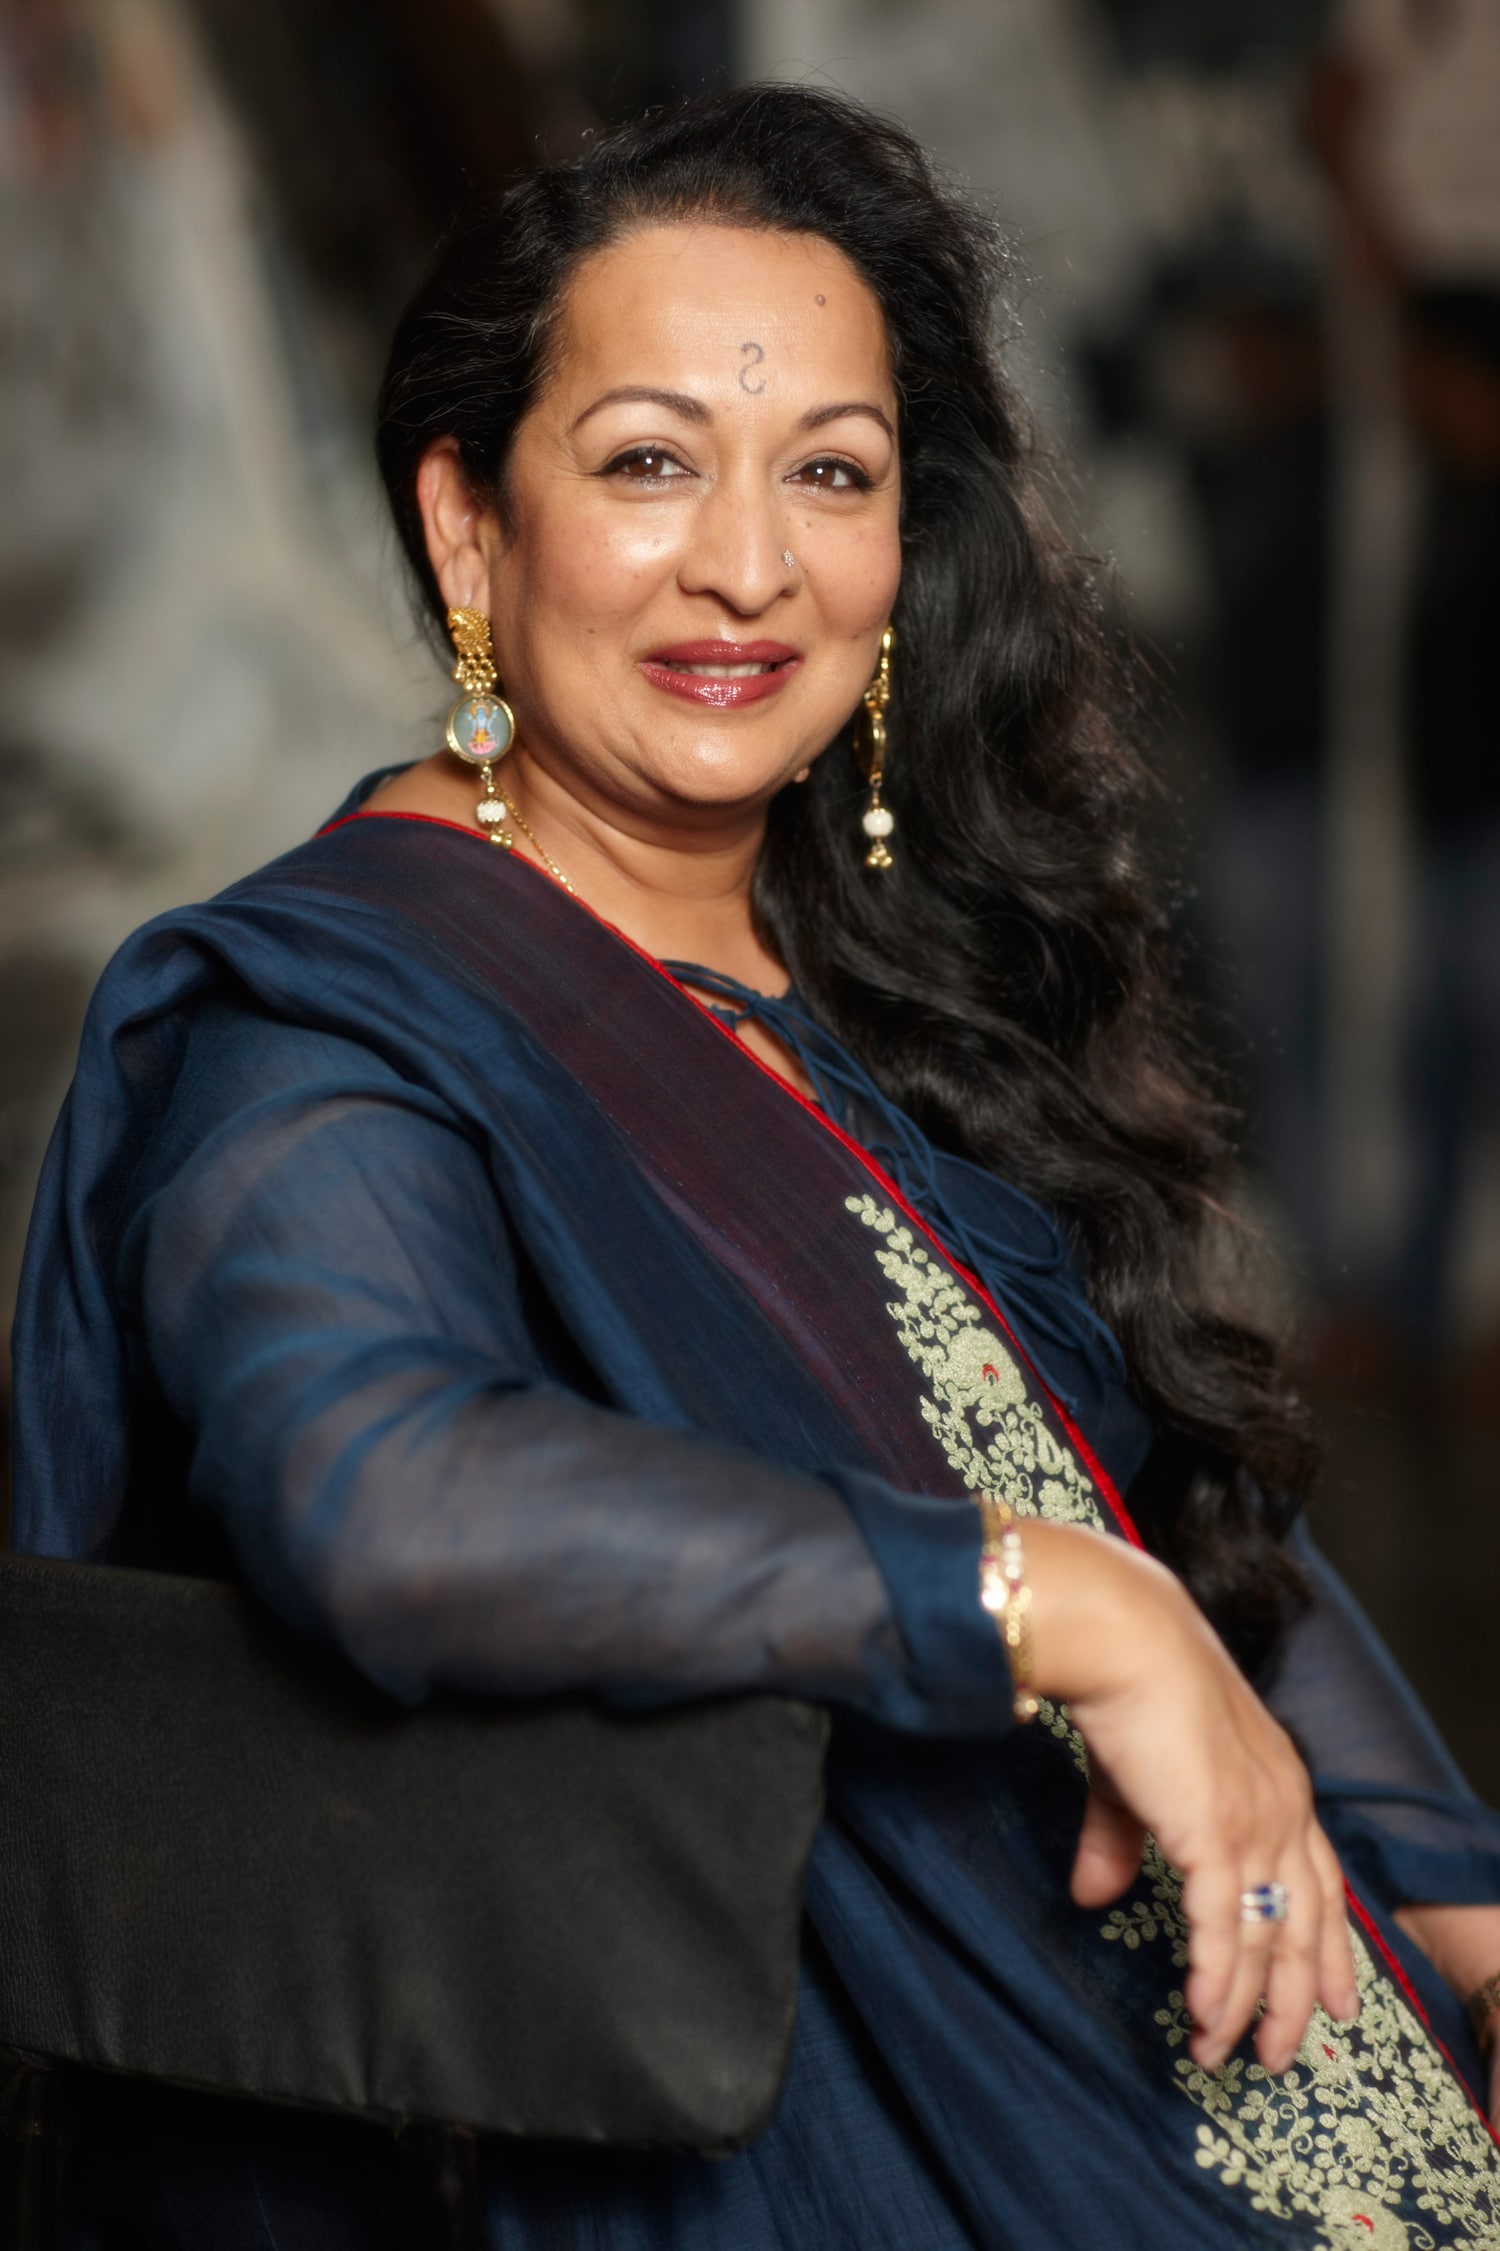 Swati Bhise, director